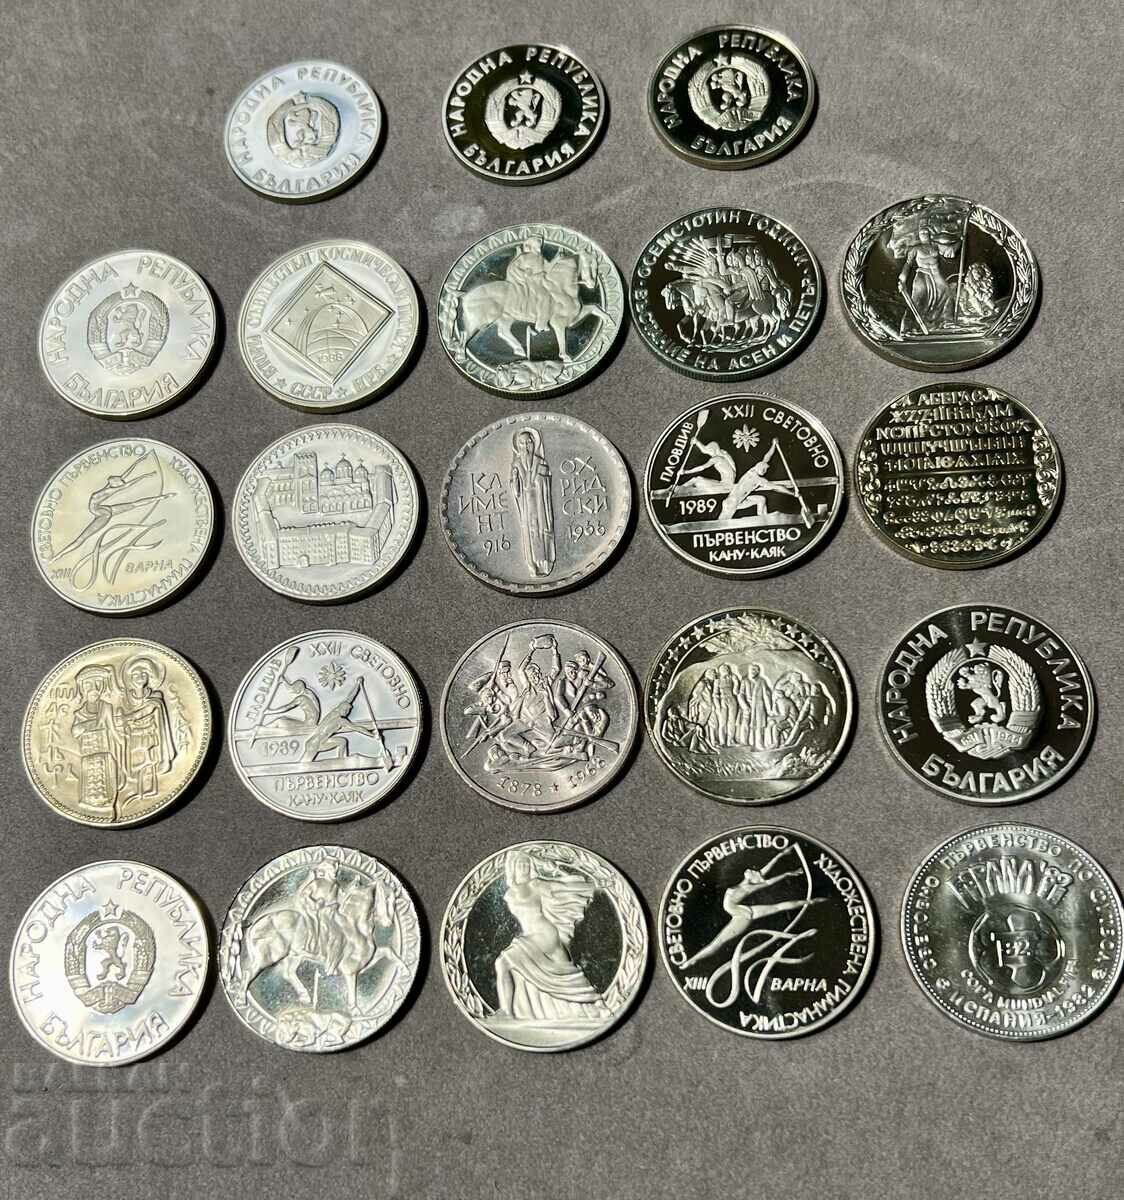 Lot EXCELENT 23 de monede jubiliare nichel anii 1980 1 și 2 BGN